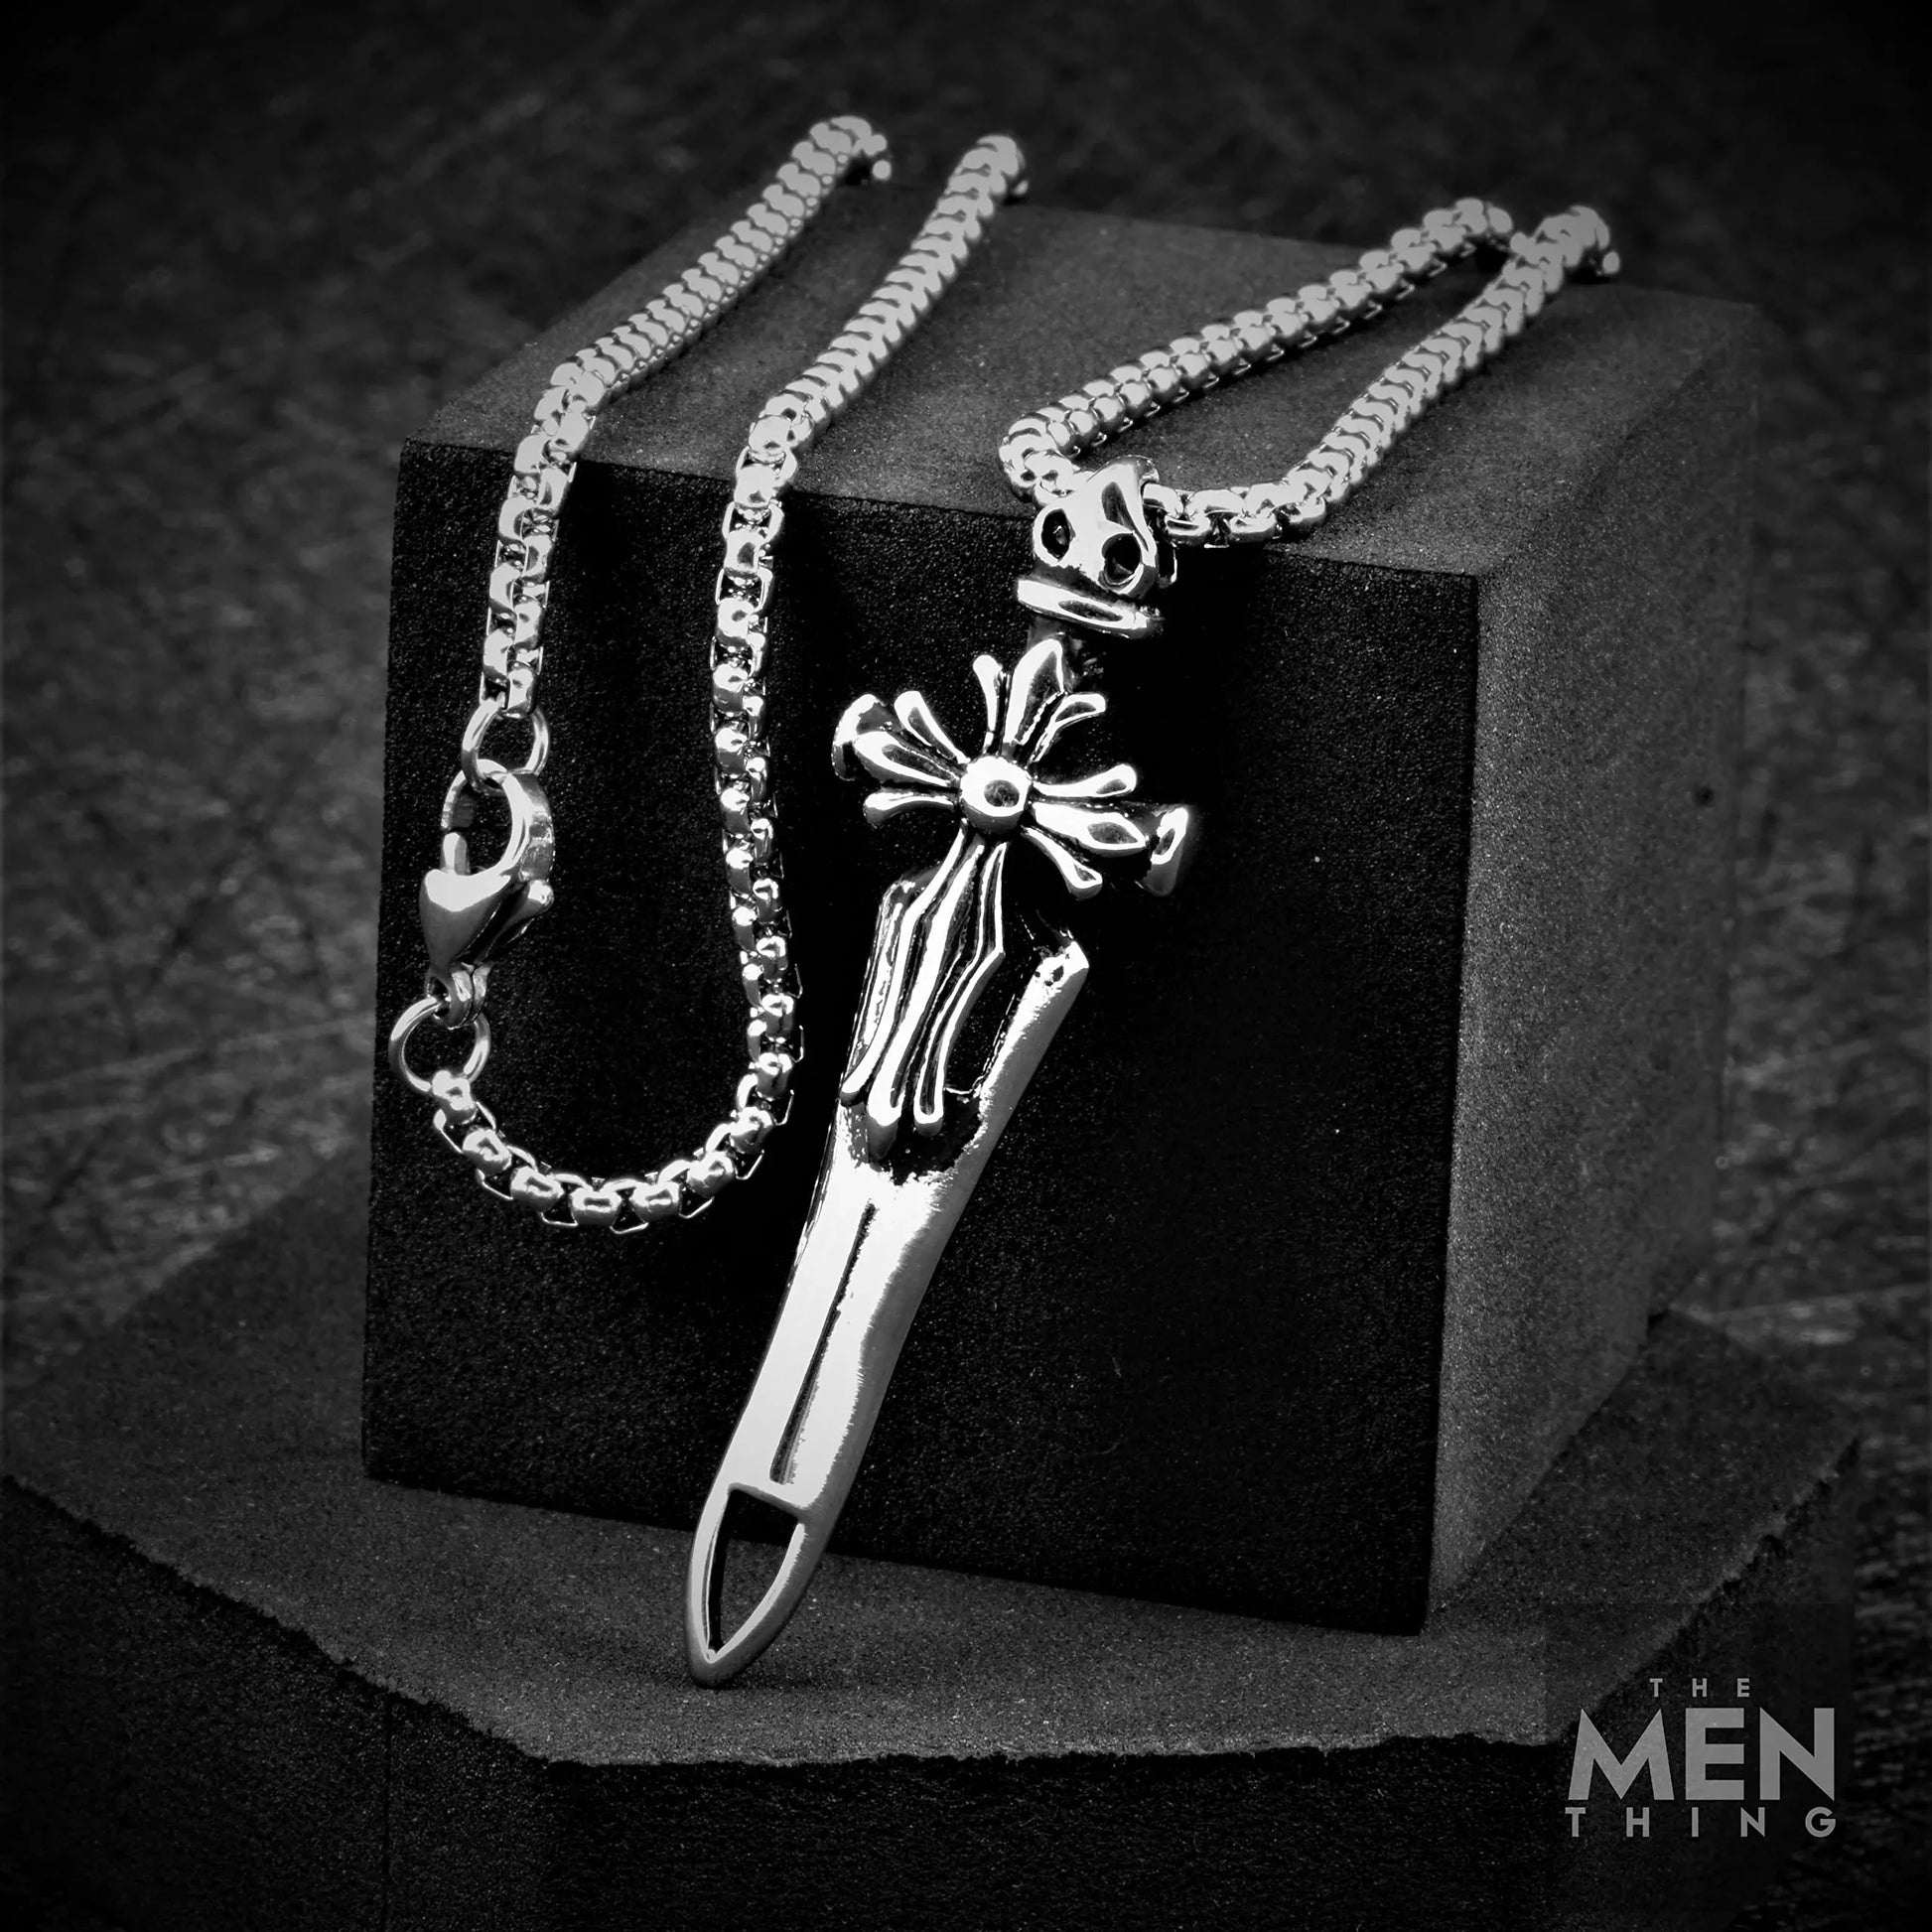 THE MEN THING Pendant for Men - Pure Titanium Steel Sword Plus Pendant with 24inch Round Box Chain for Men & Boys